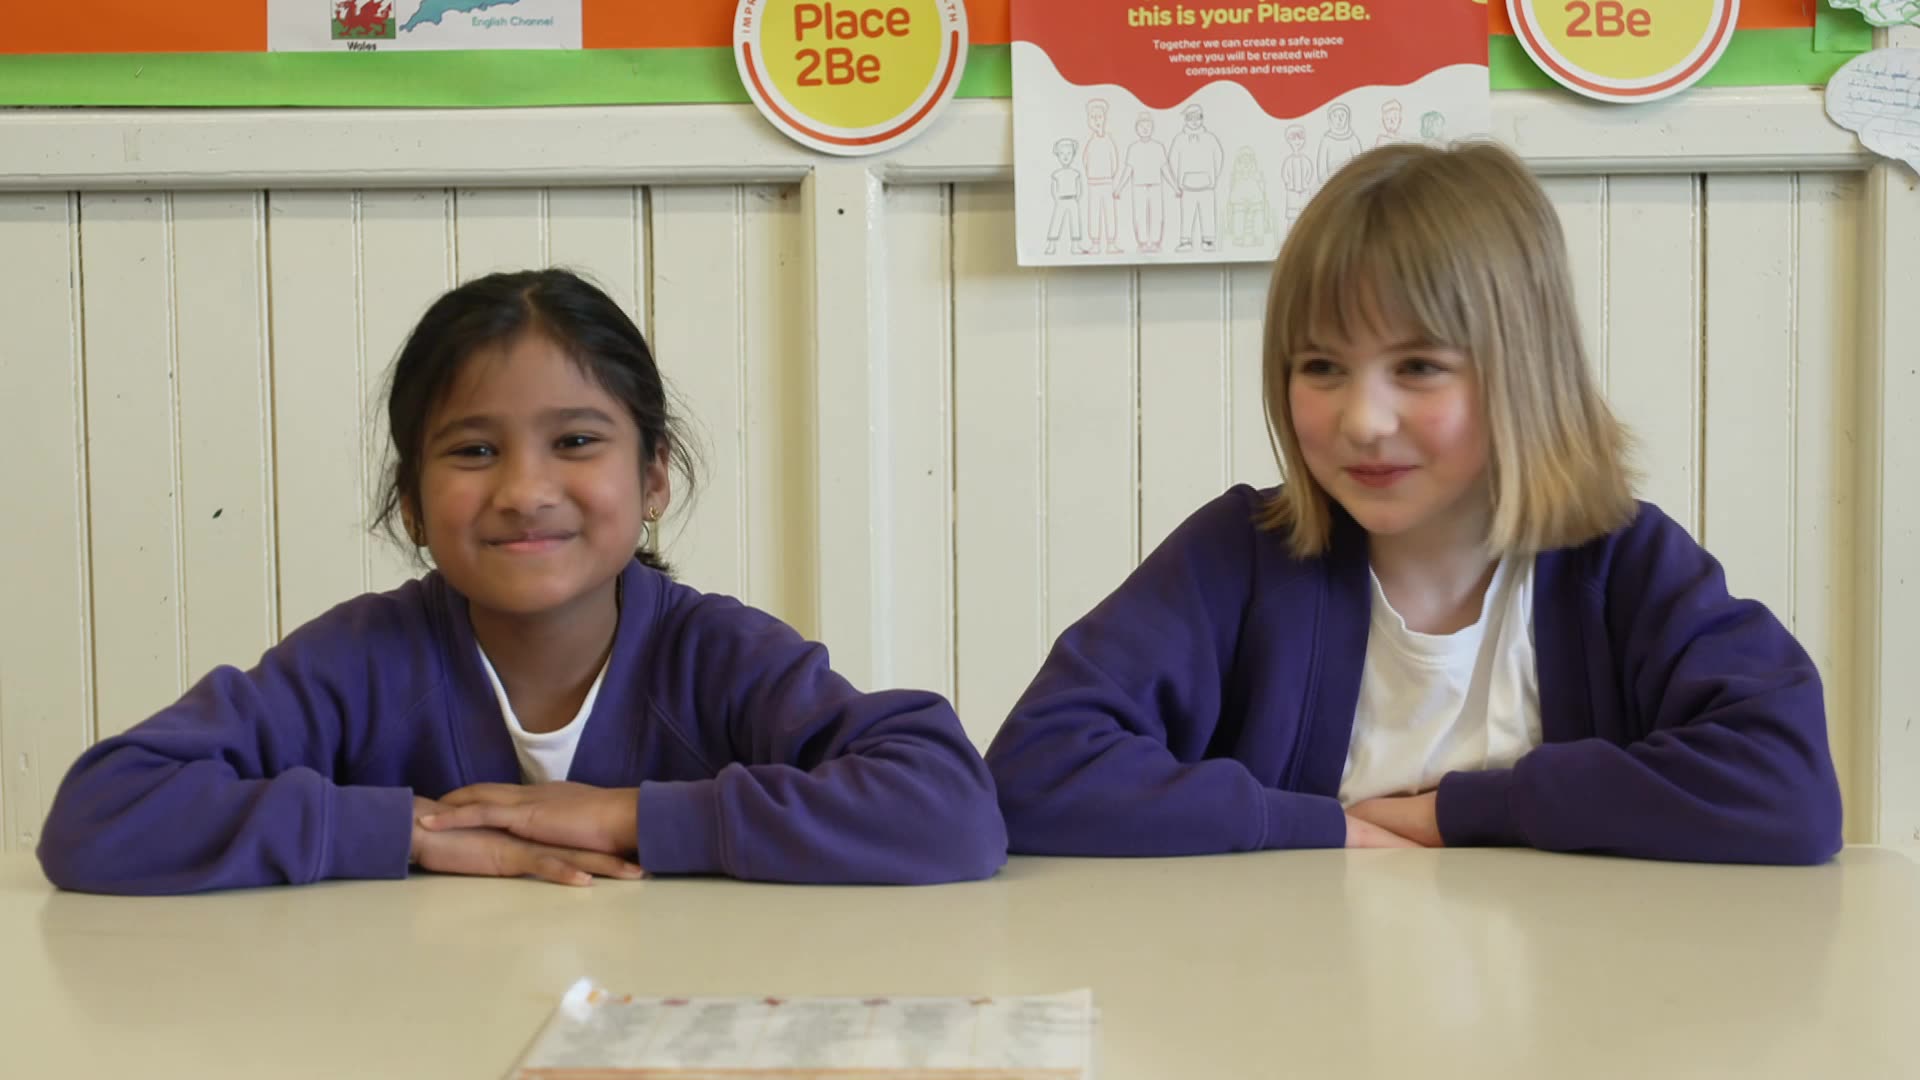 Children’s Mental Health Week: Enfield Pupils Filmed for Children’s News Programme